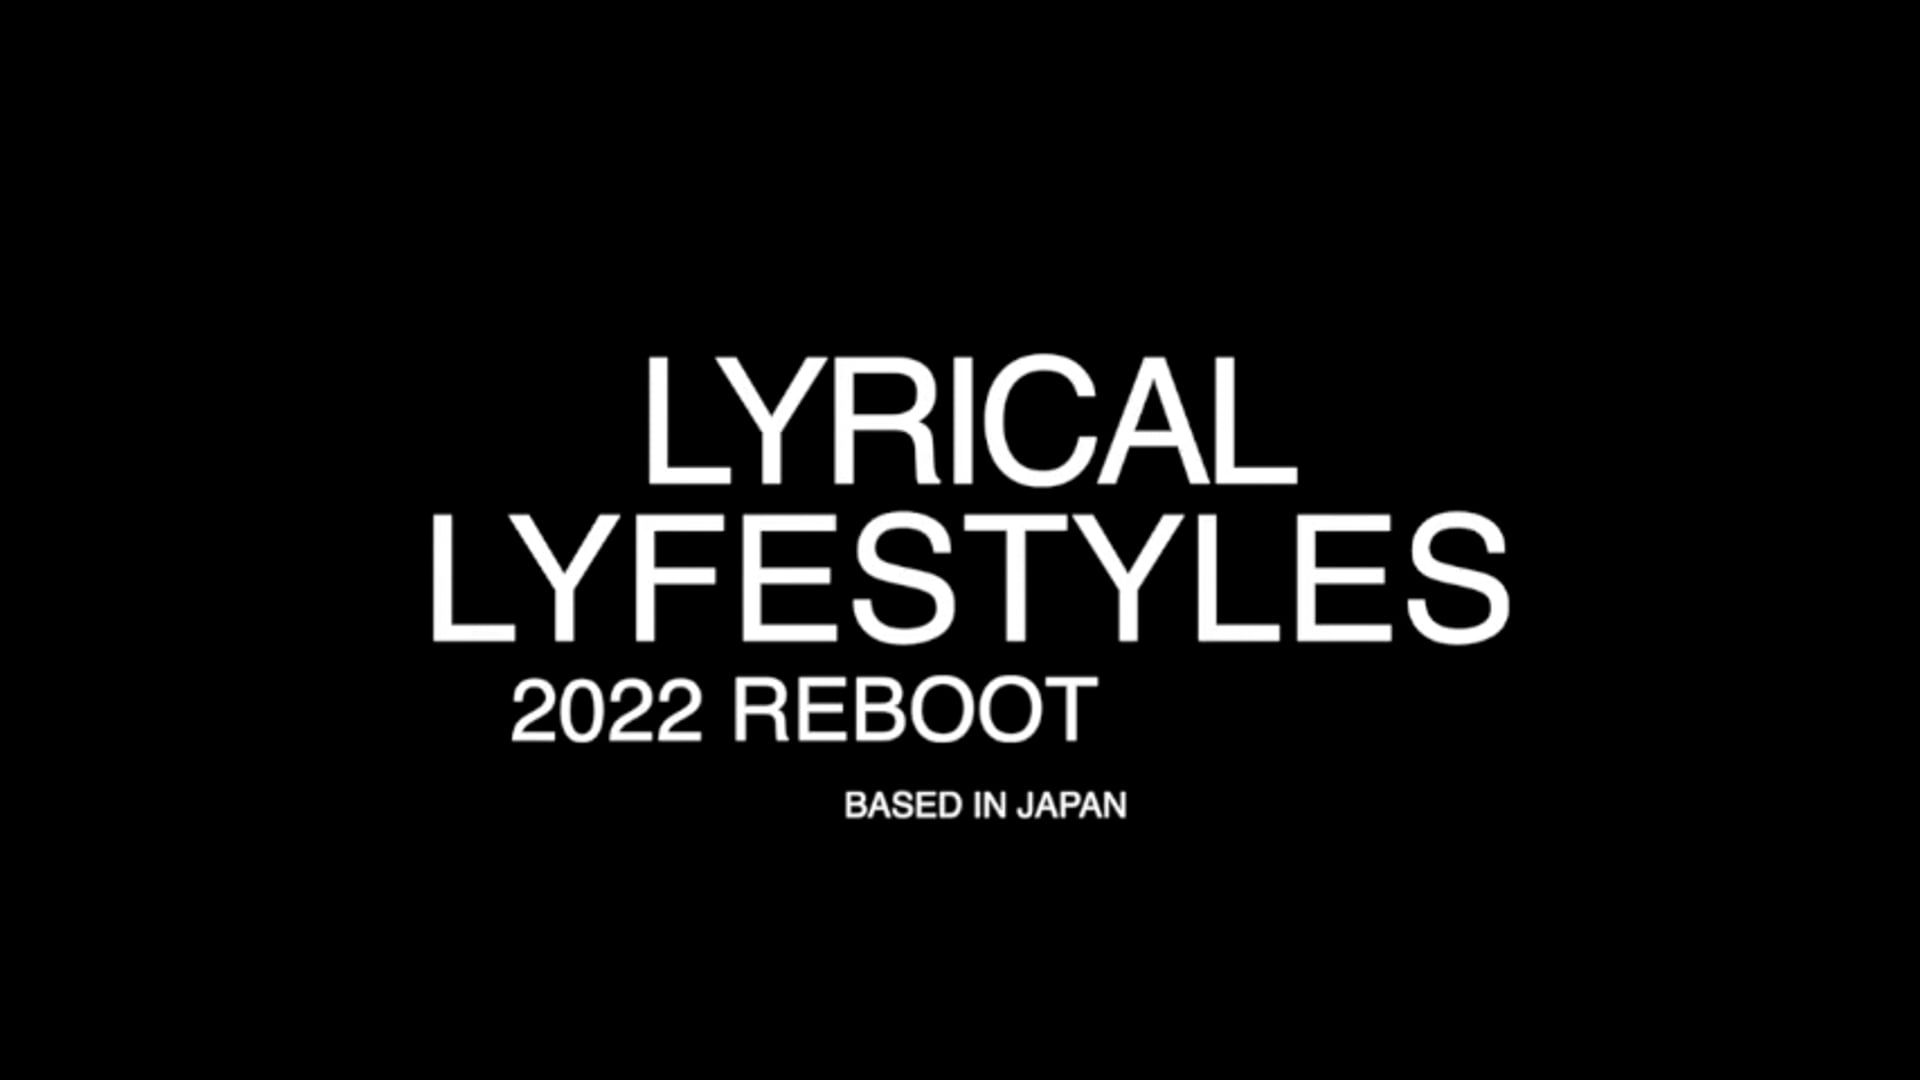 Lyrical Lyfestyles Trailer